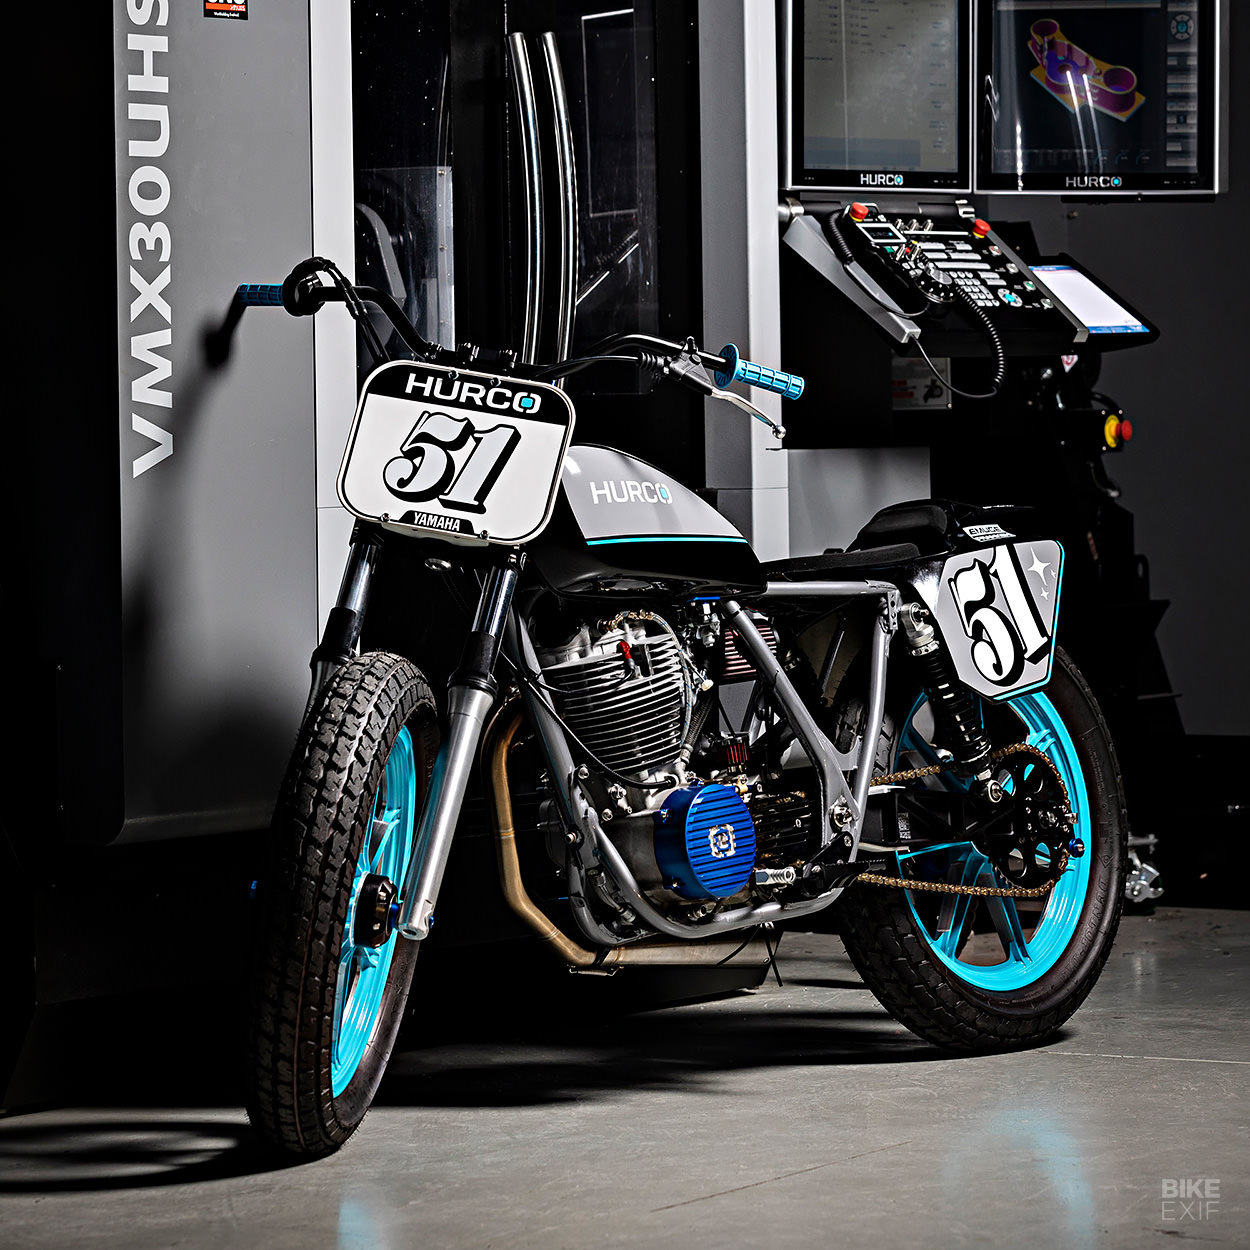 Yamaha SR500 flat tracker by Hurco